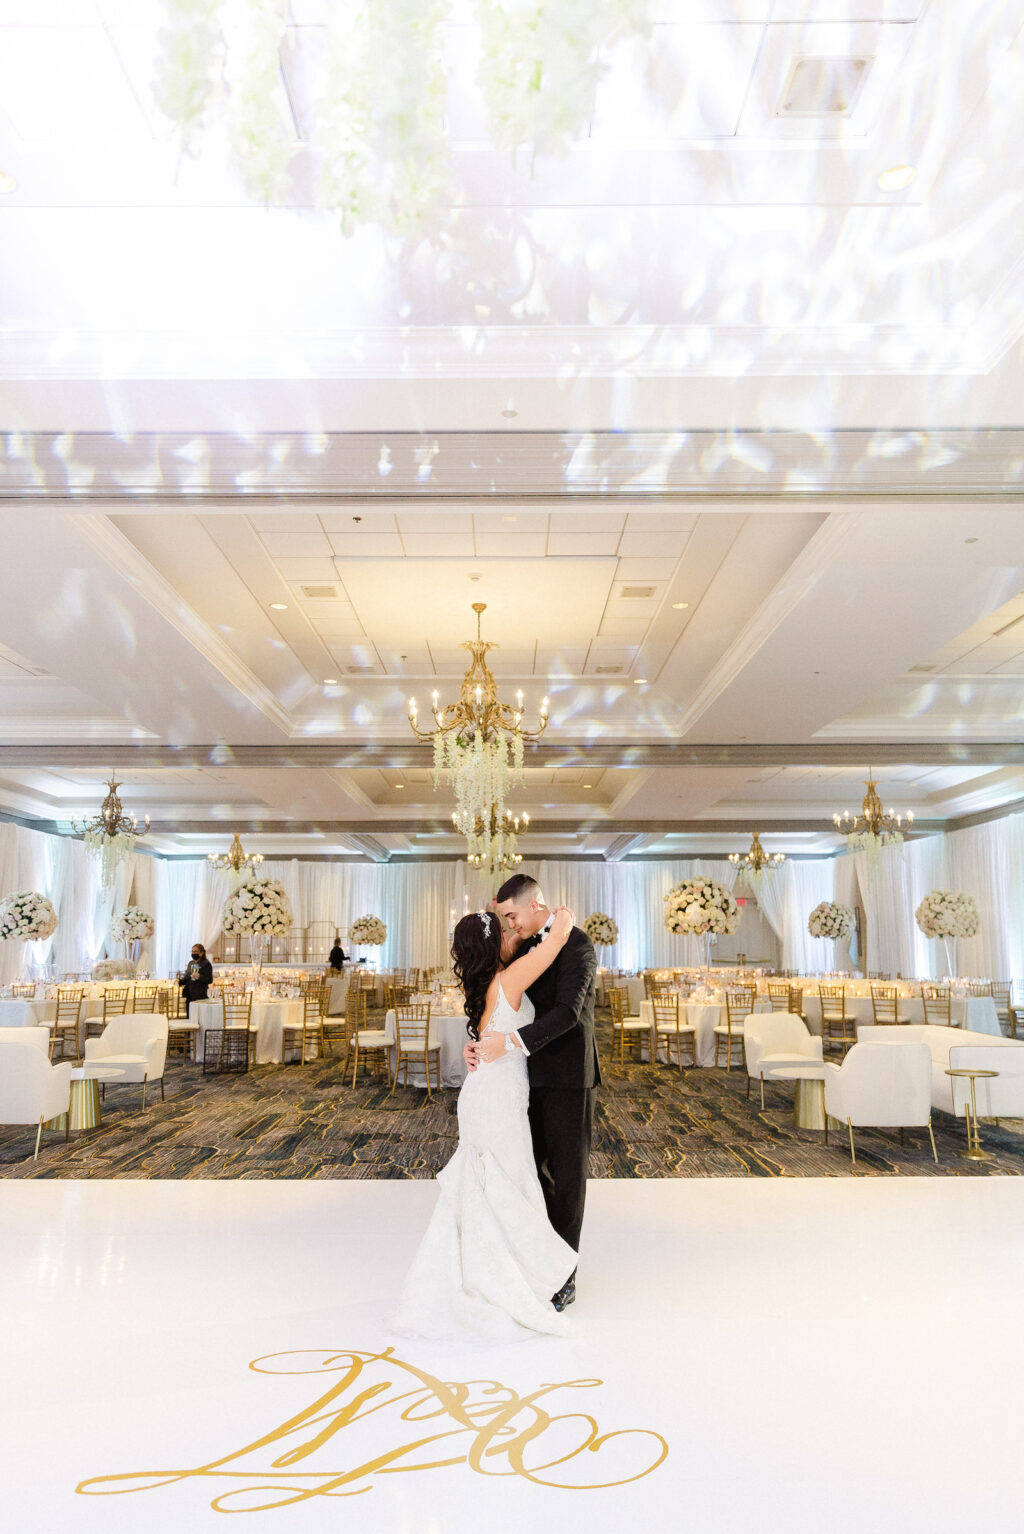 Romantic Bride and Groom First Dance on White Dance Floor with Custom Gold Monogram | Wedding Venue Tampa Marriott Water Street